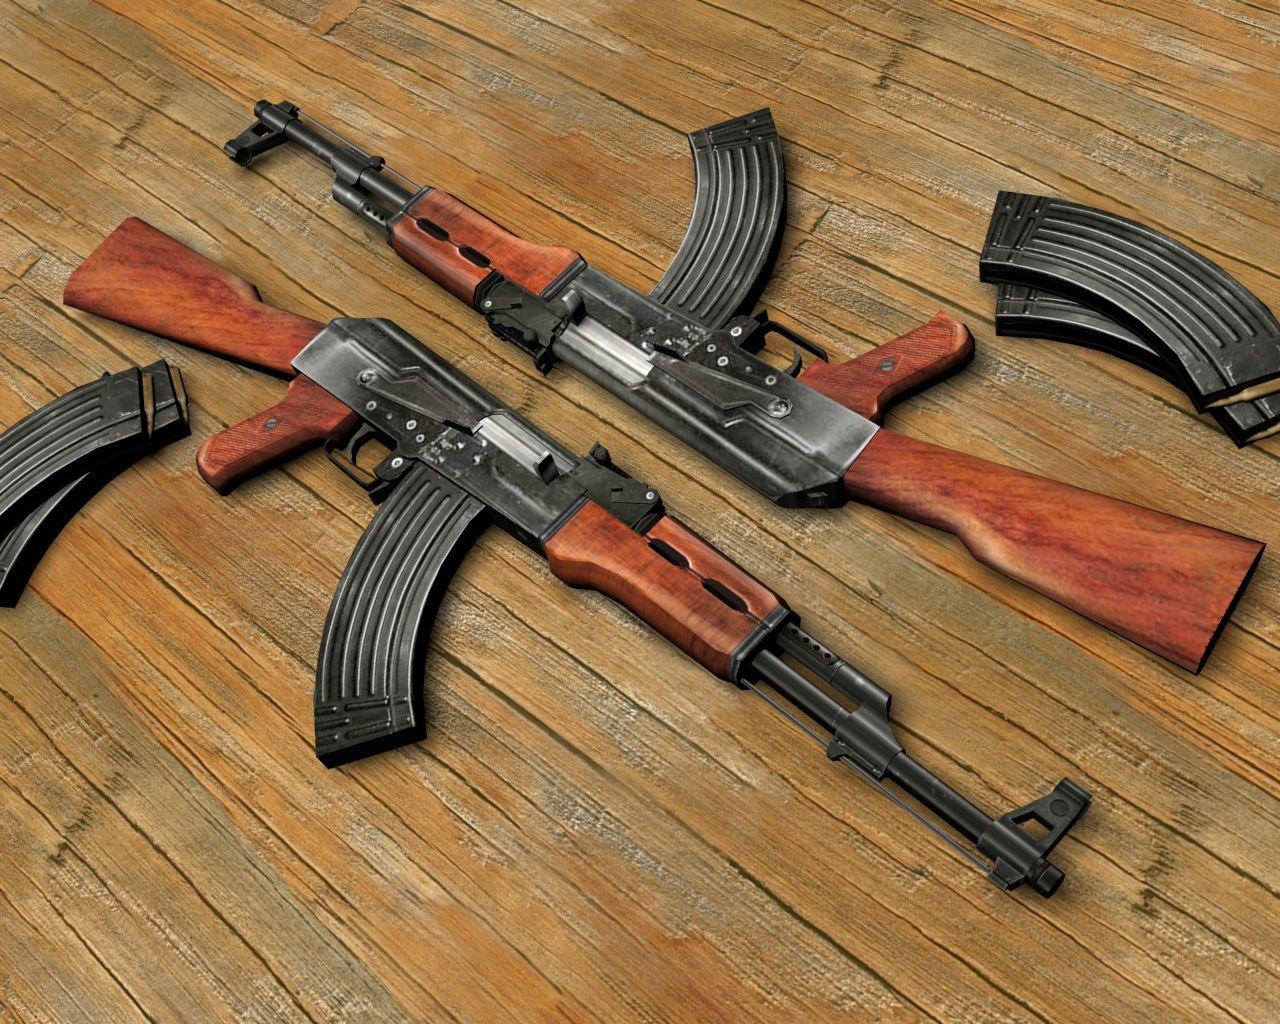 AK-47 Assault Rifles To Be Made In Florida | US News | Sky News